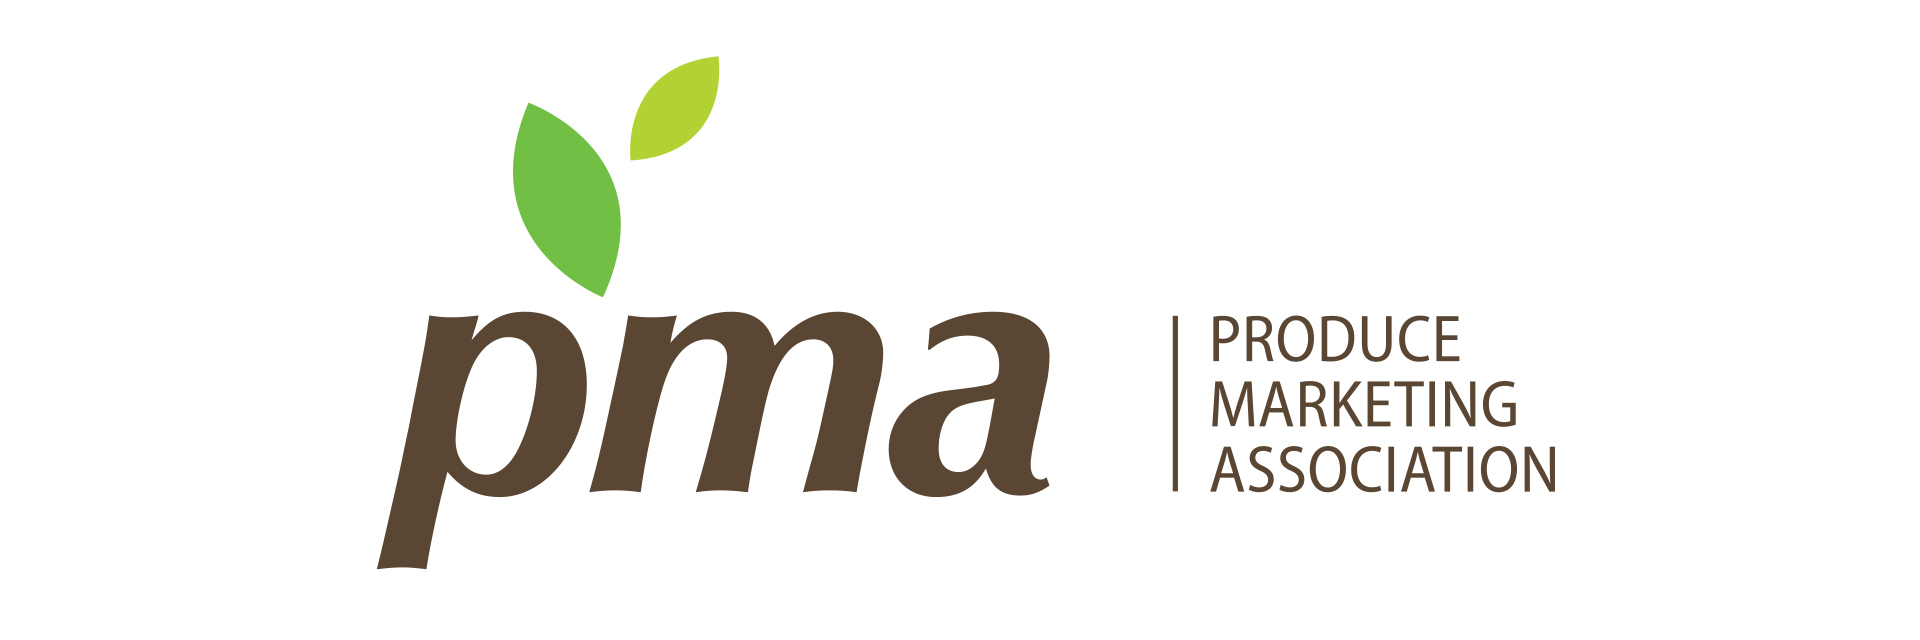 Produce Marketing Association logo